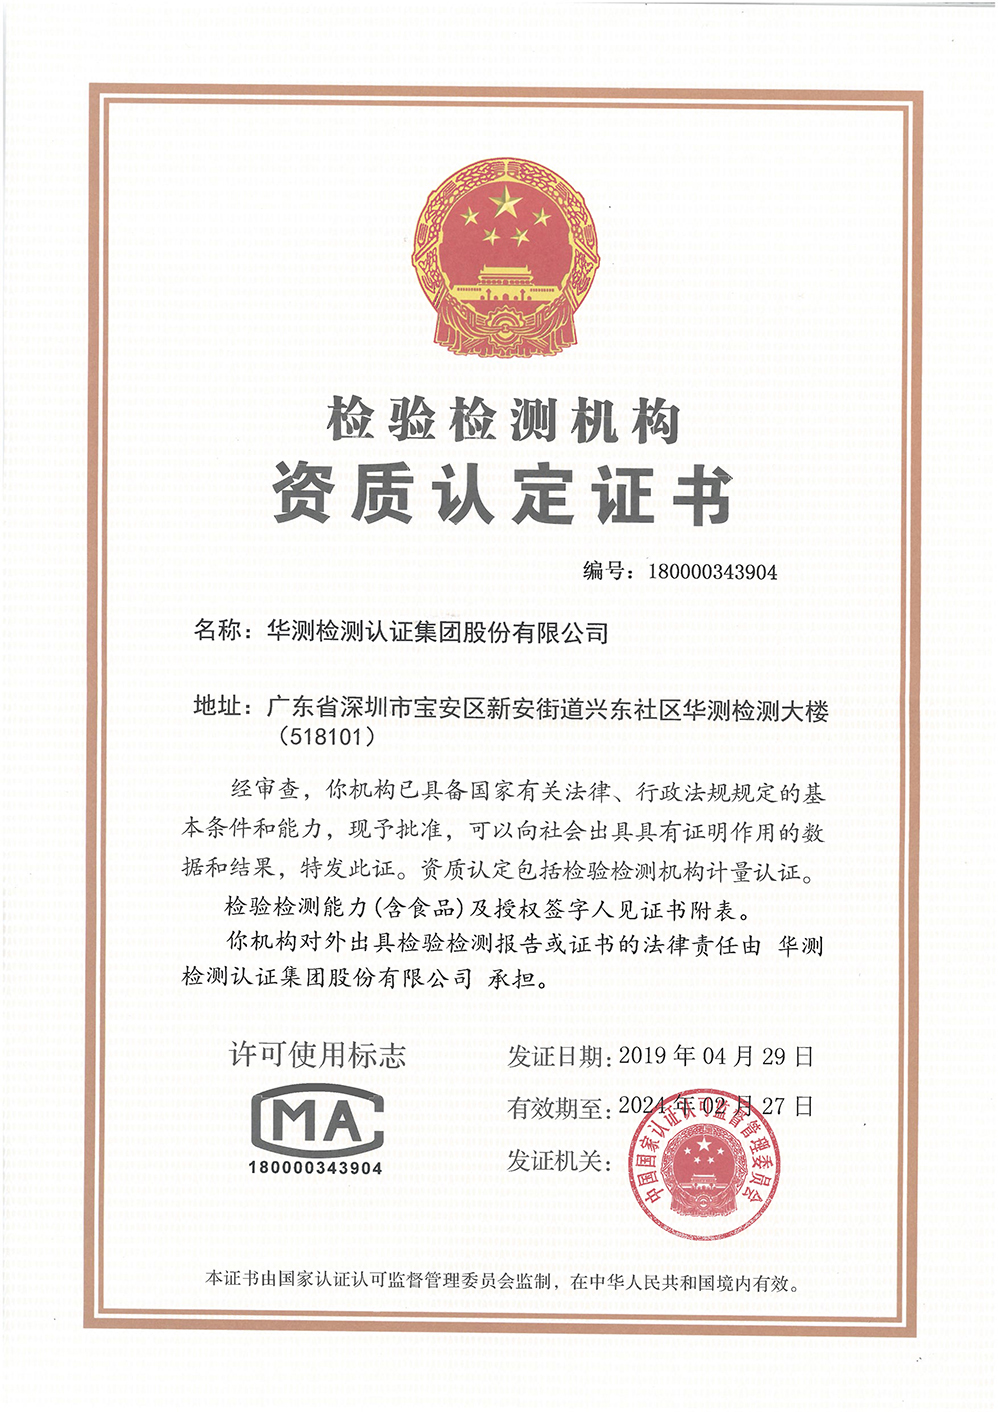 CMA Certification-Shenzhen